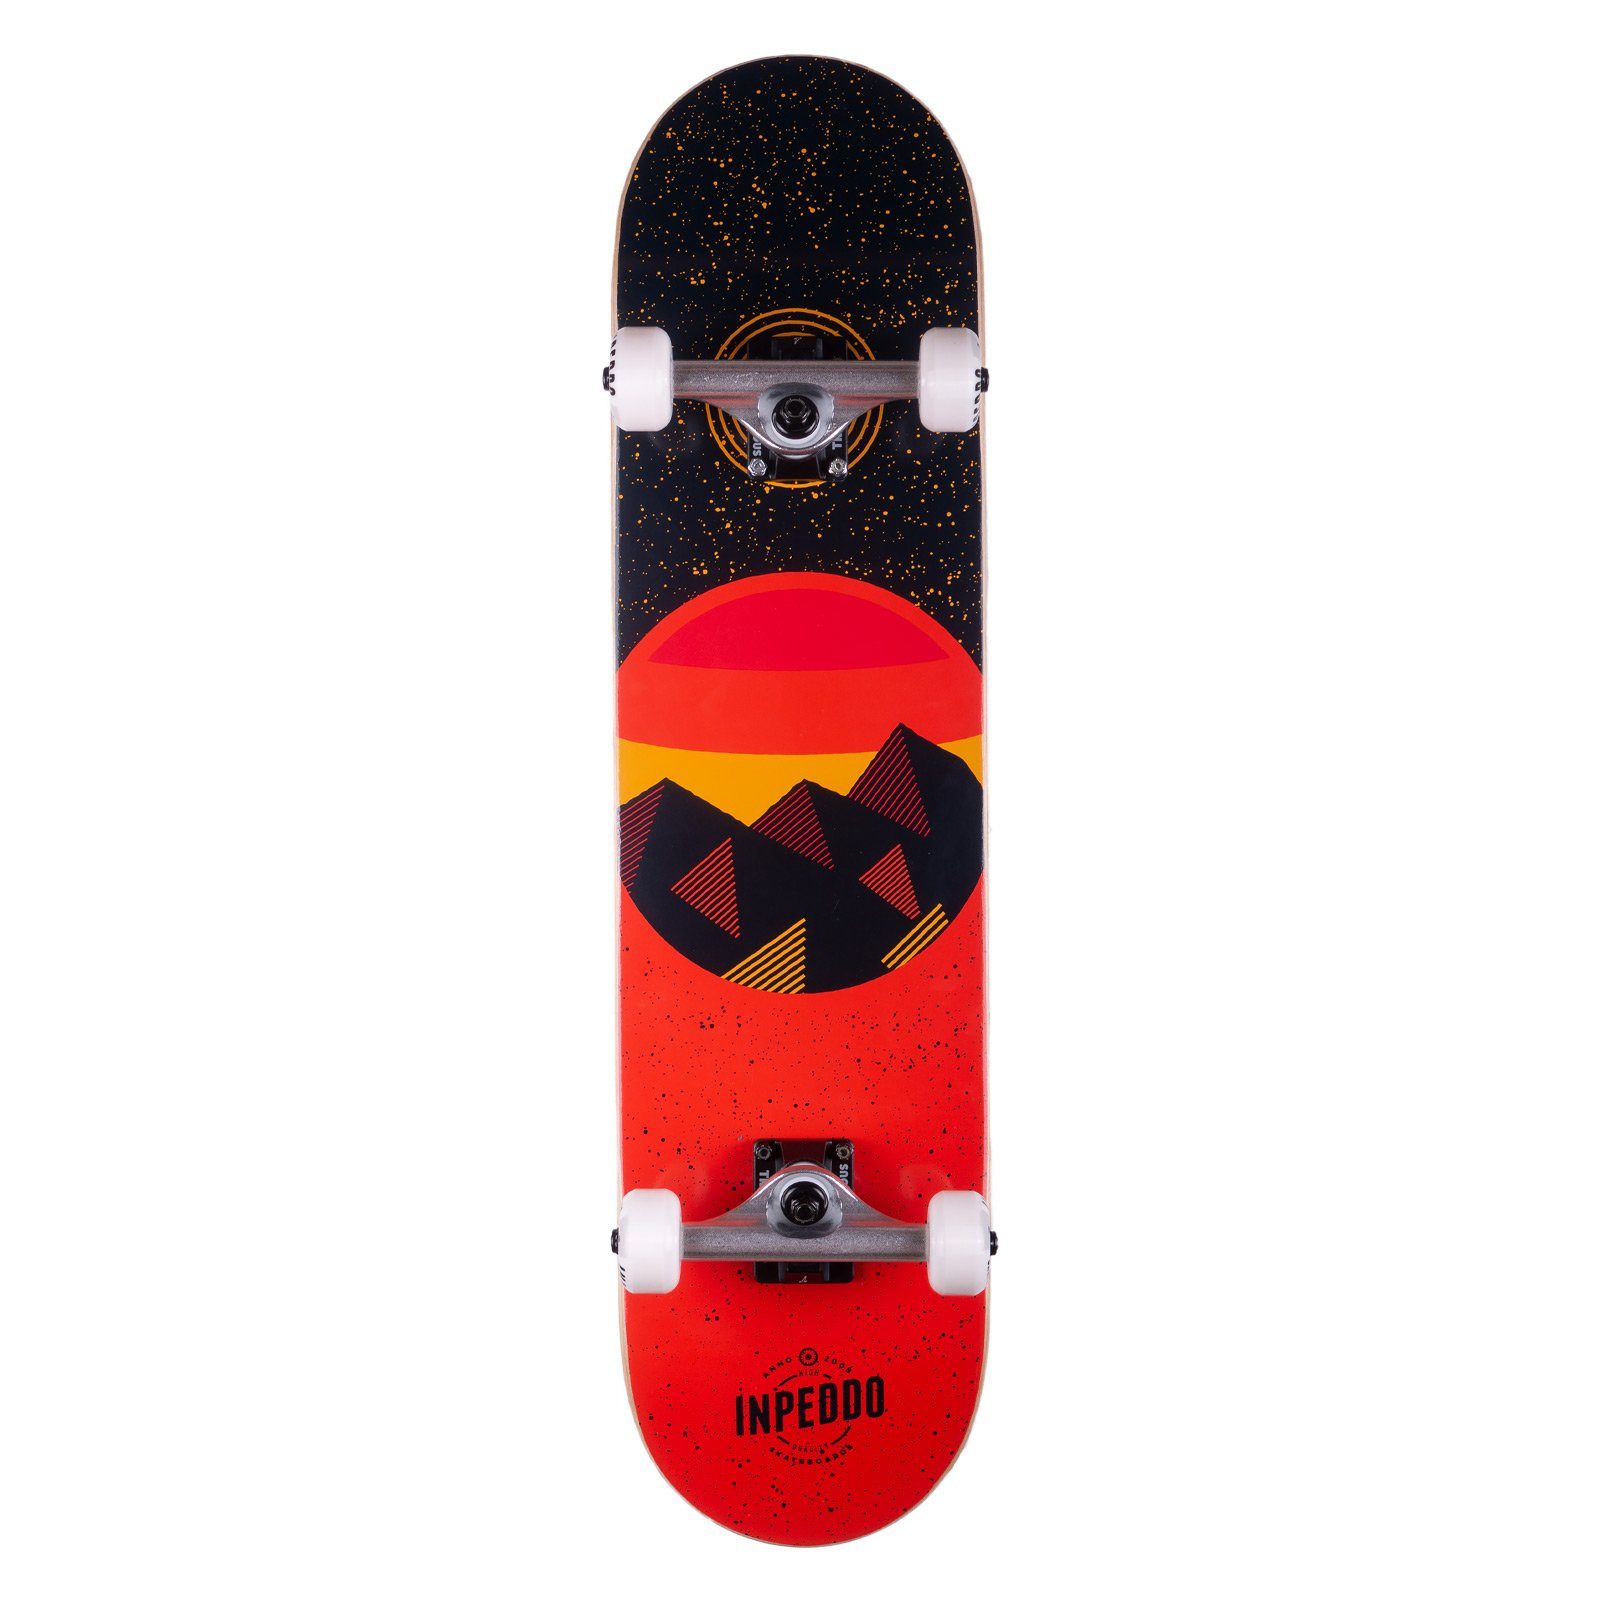 7.875' (red) Mountain Skateboard Inpeddo